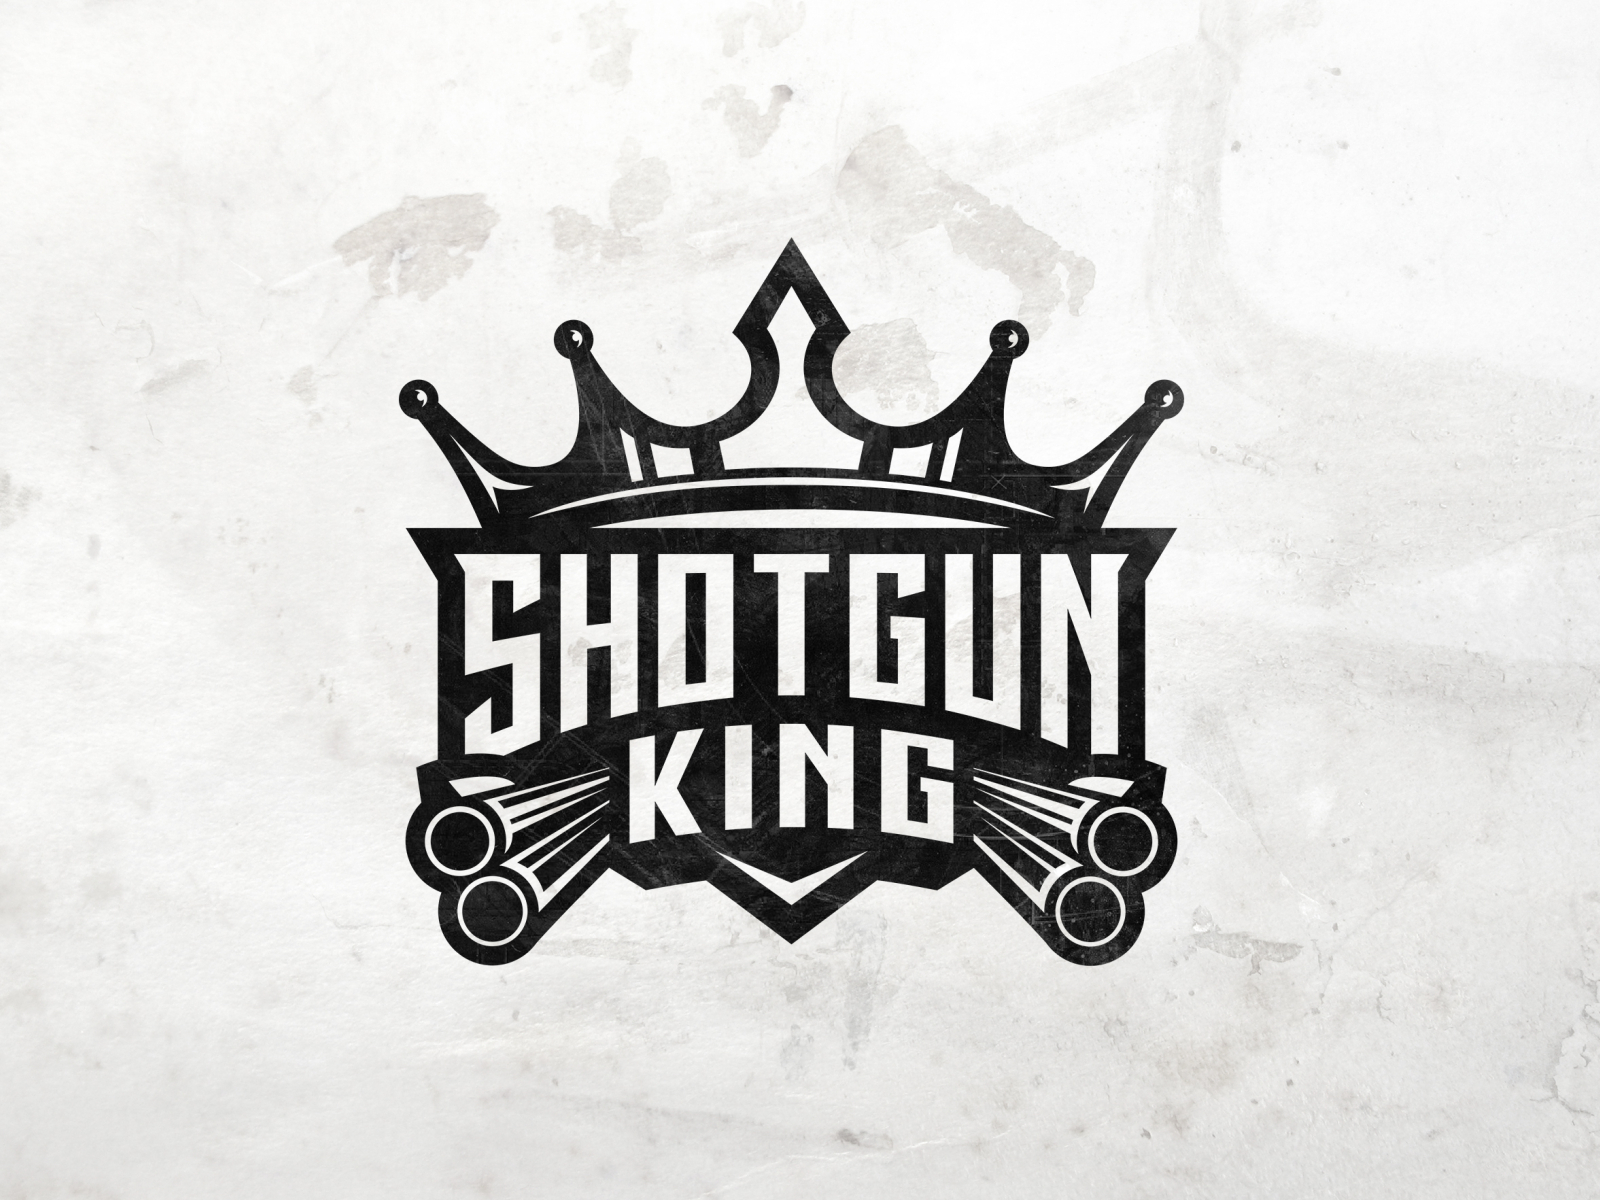 Shotgun King by Dmitry Krino on Dribbble